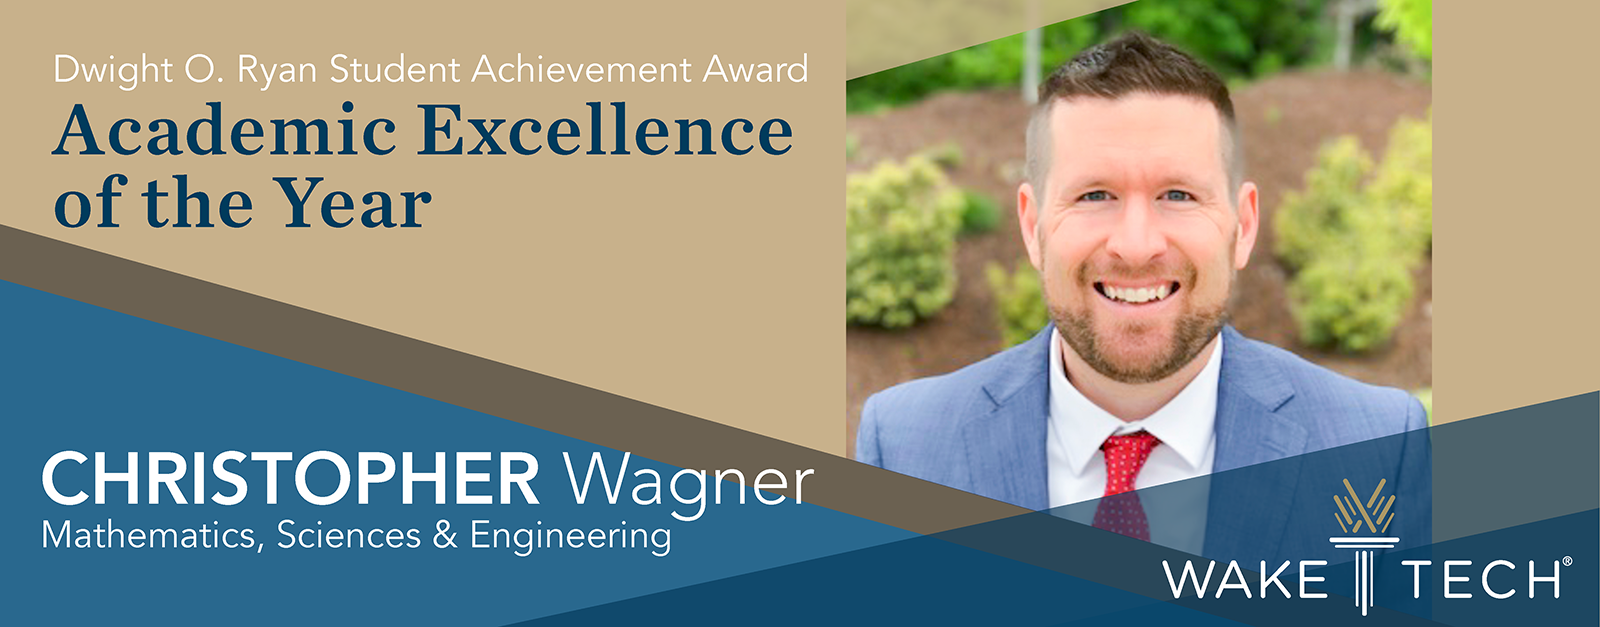 Dwight O. Ryan Student Achievement Award - Christopher Wagner